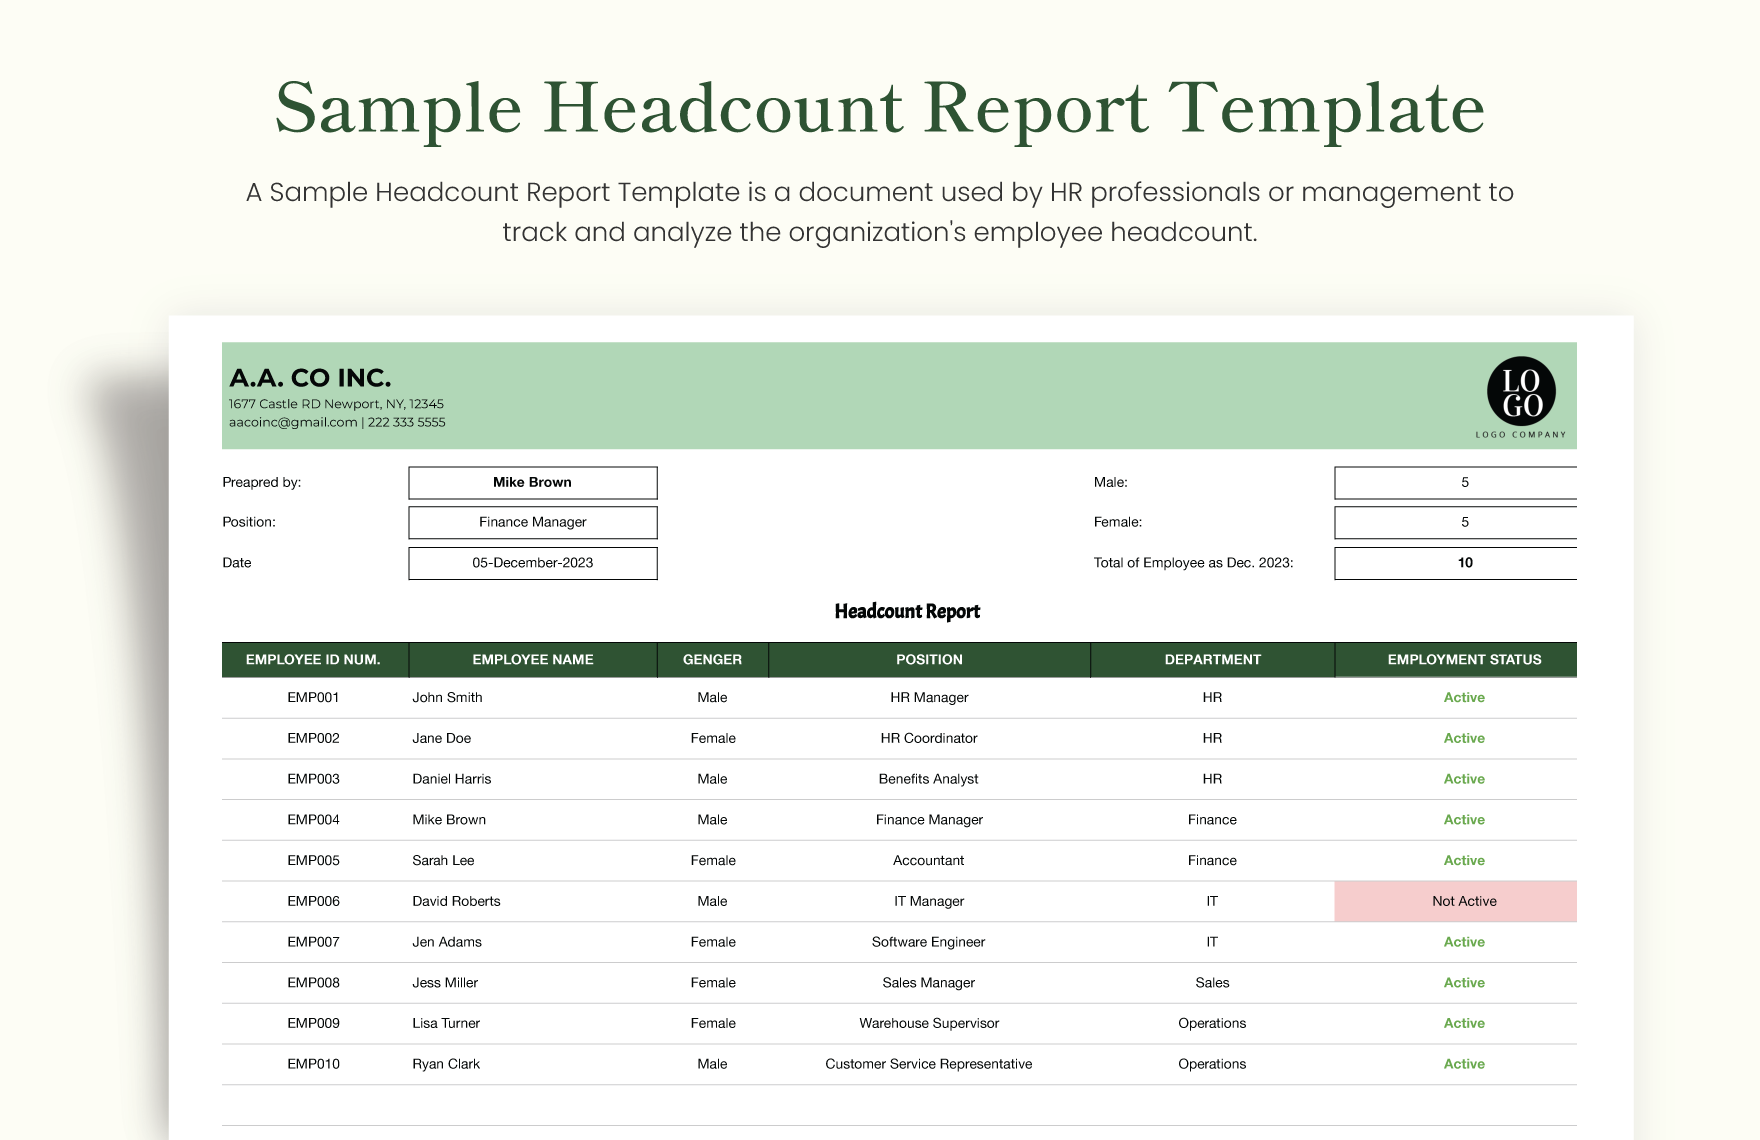 Sample Headcount Report Template